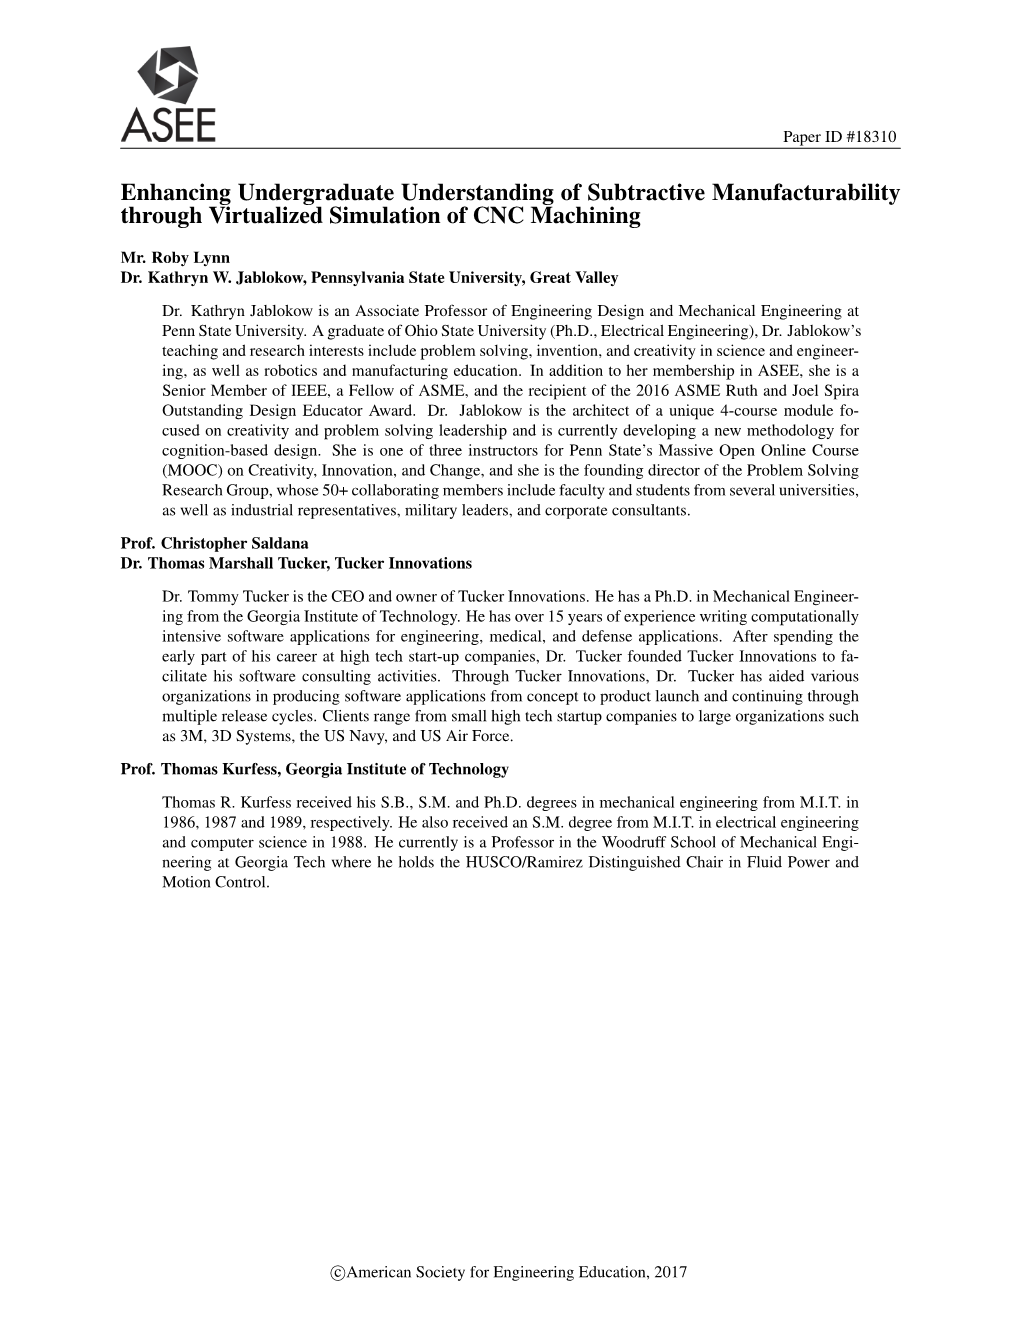 Enhancing Undergraduate Understanding of Subtractive Manufacturability Through Virtualized Simulation of CNC Machining